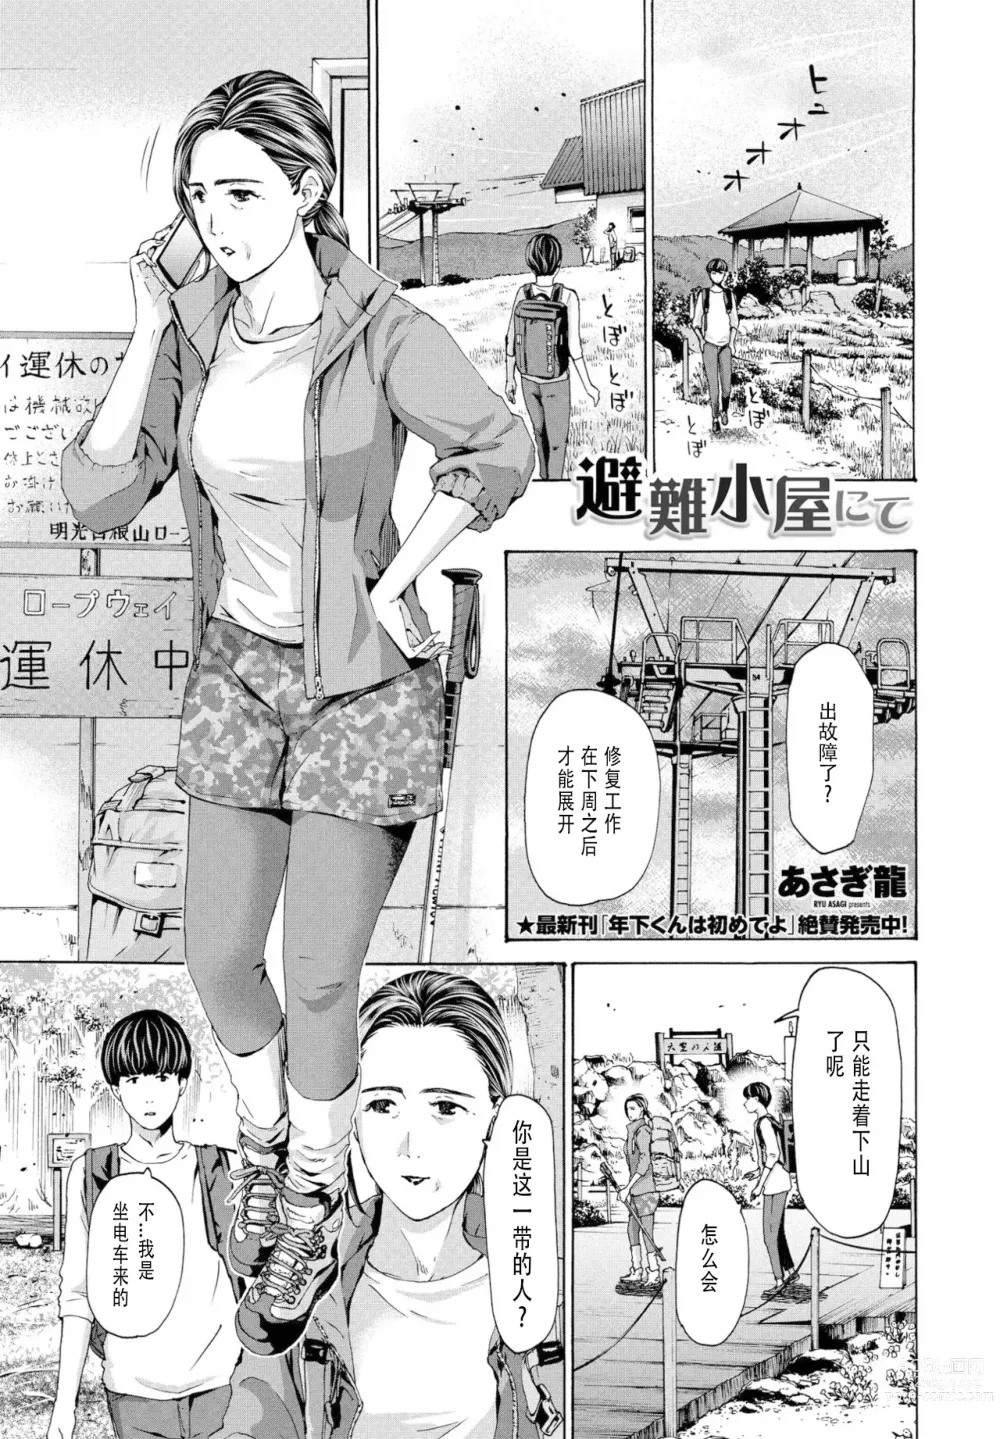 Page 1 of manga 避难小屋